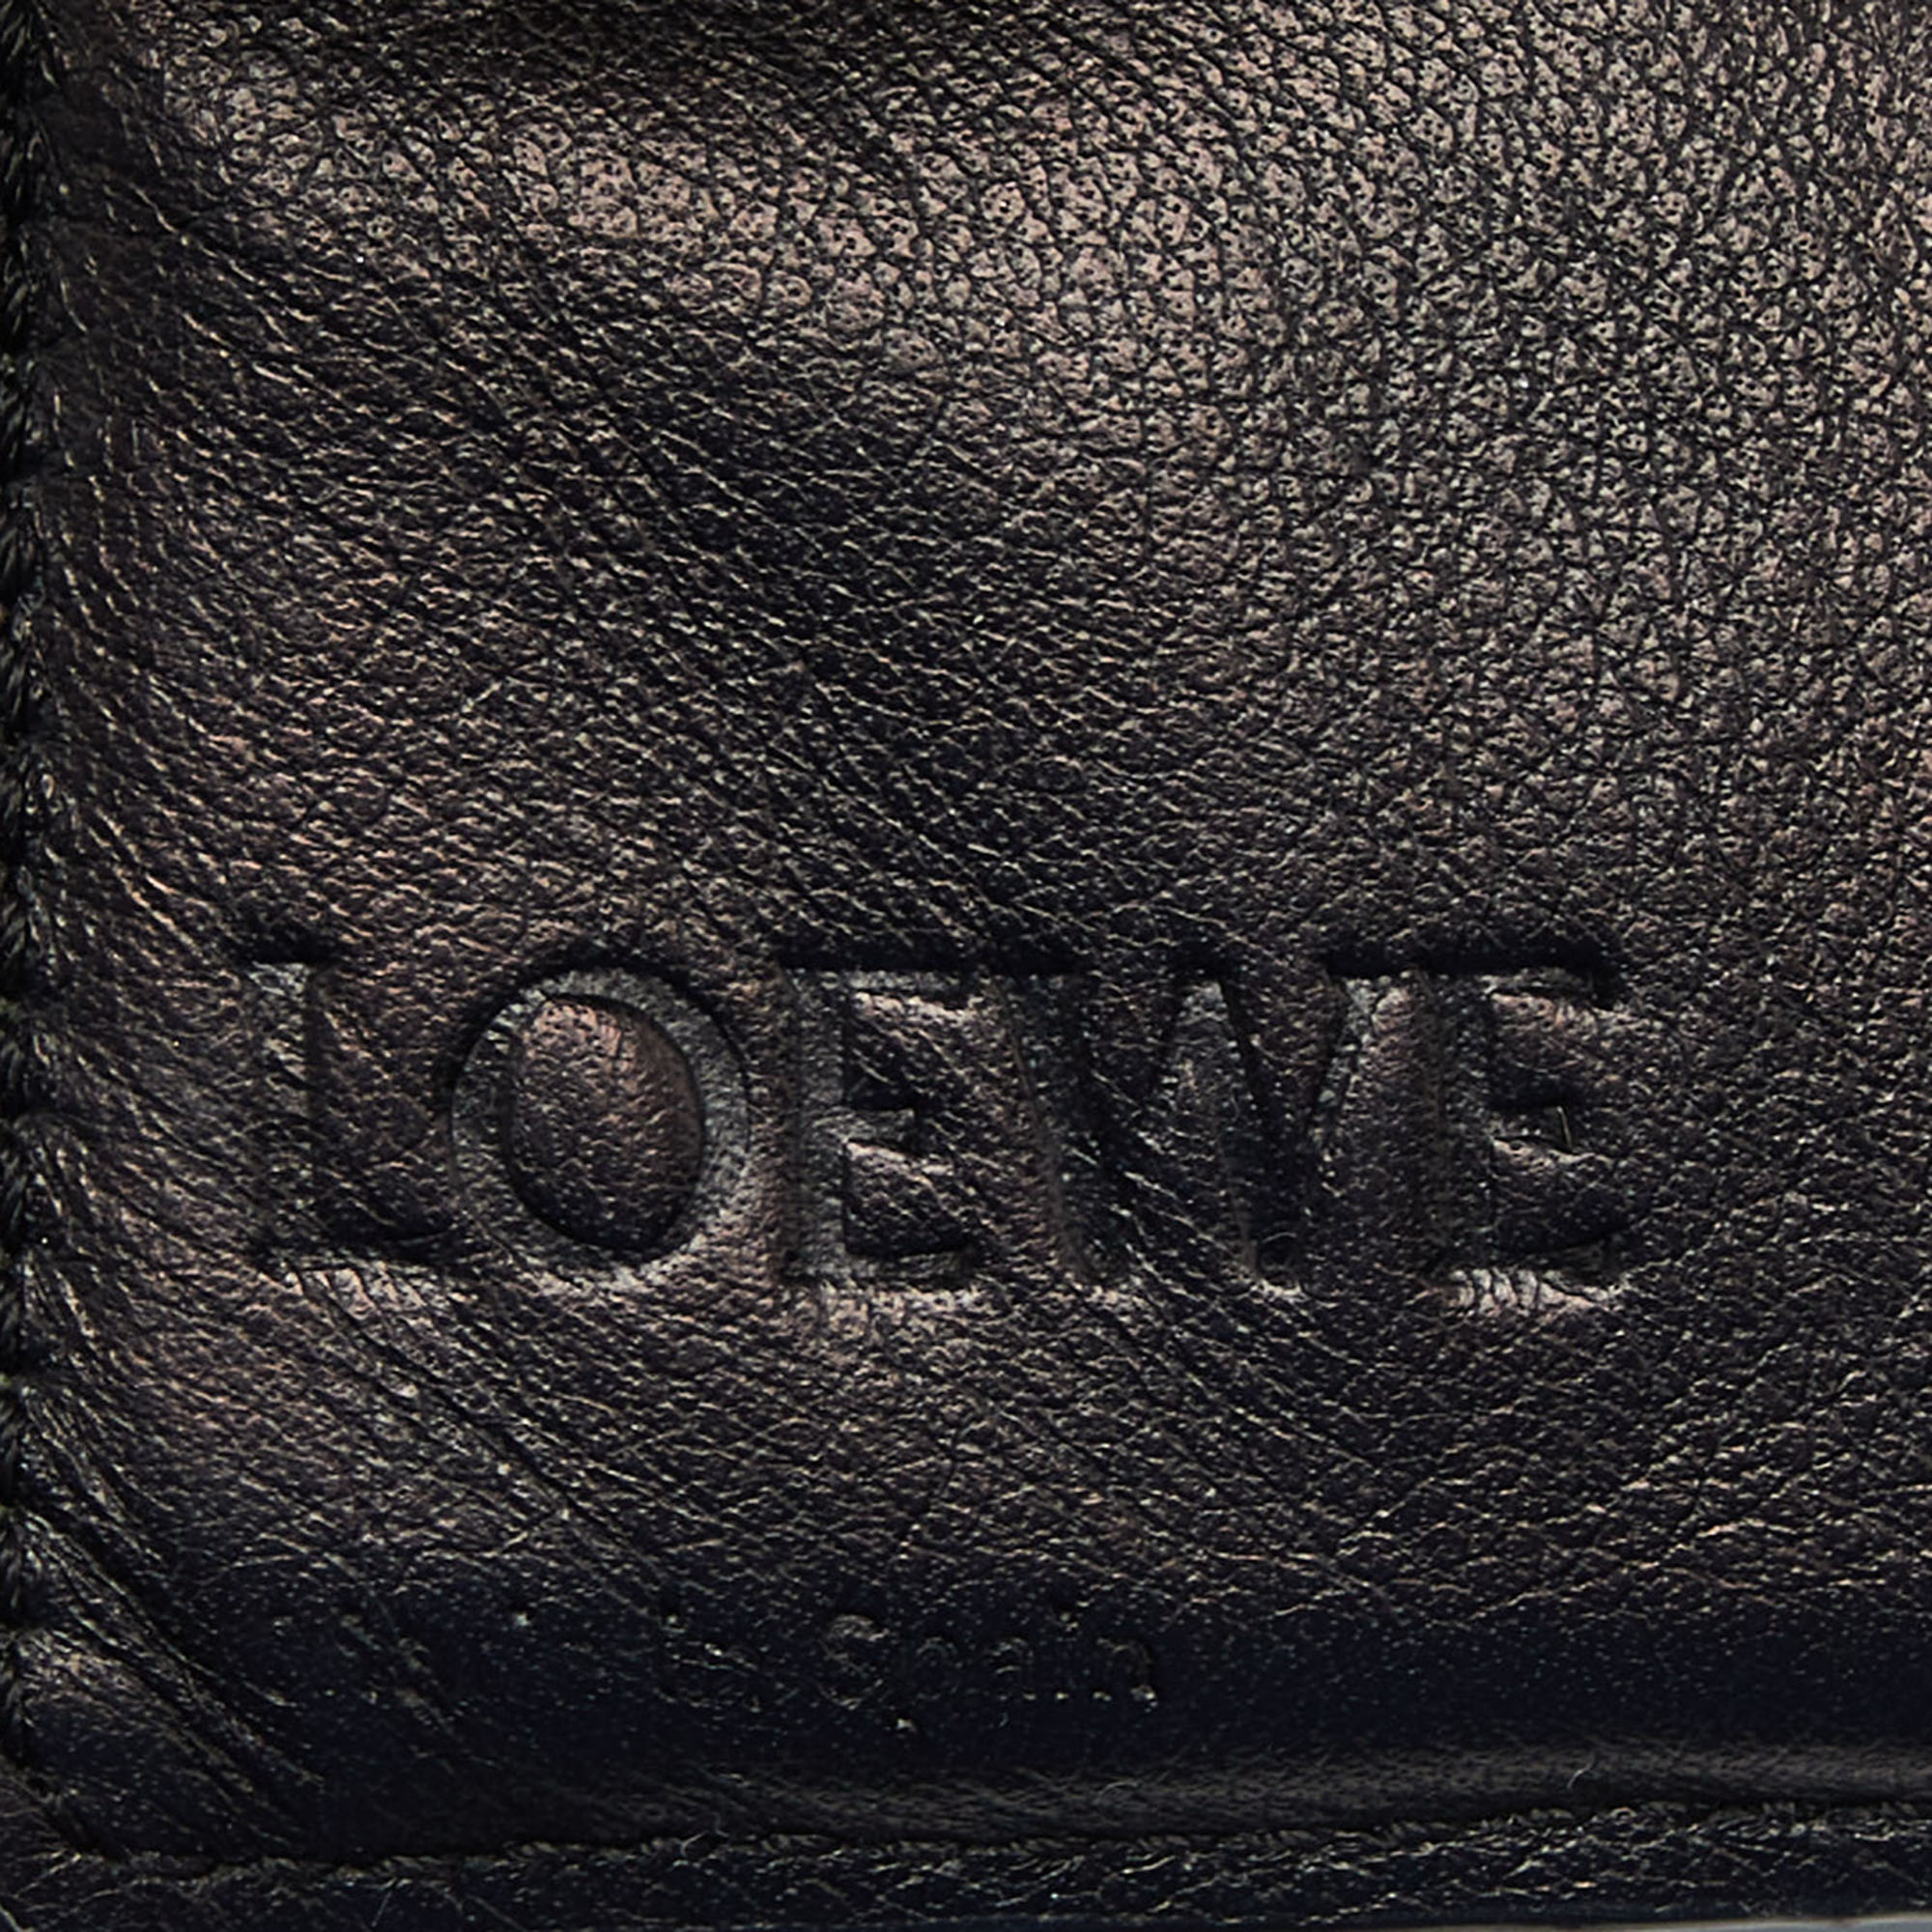 Loewe Green/Blue Leather Zip Compact Wallet